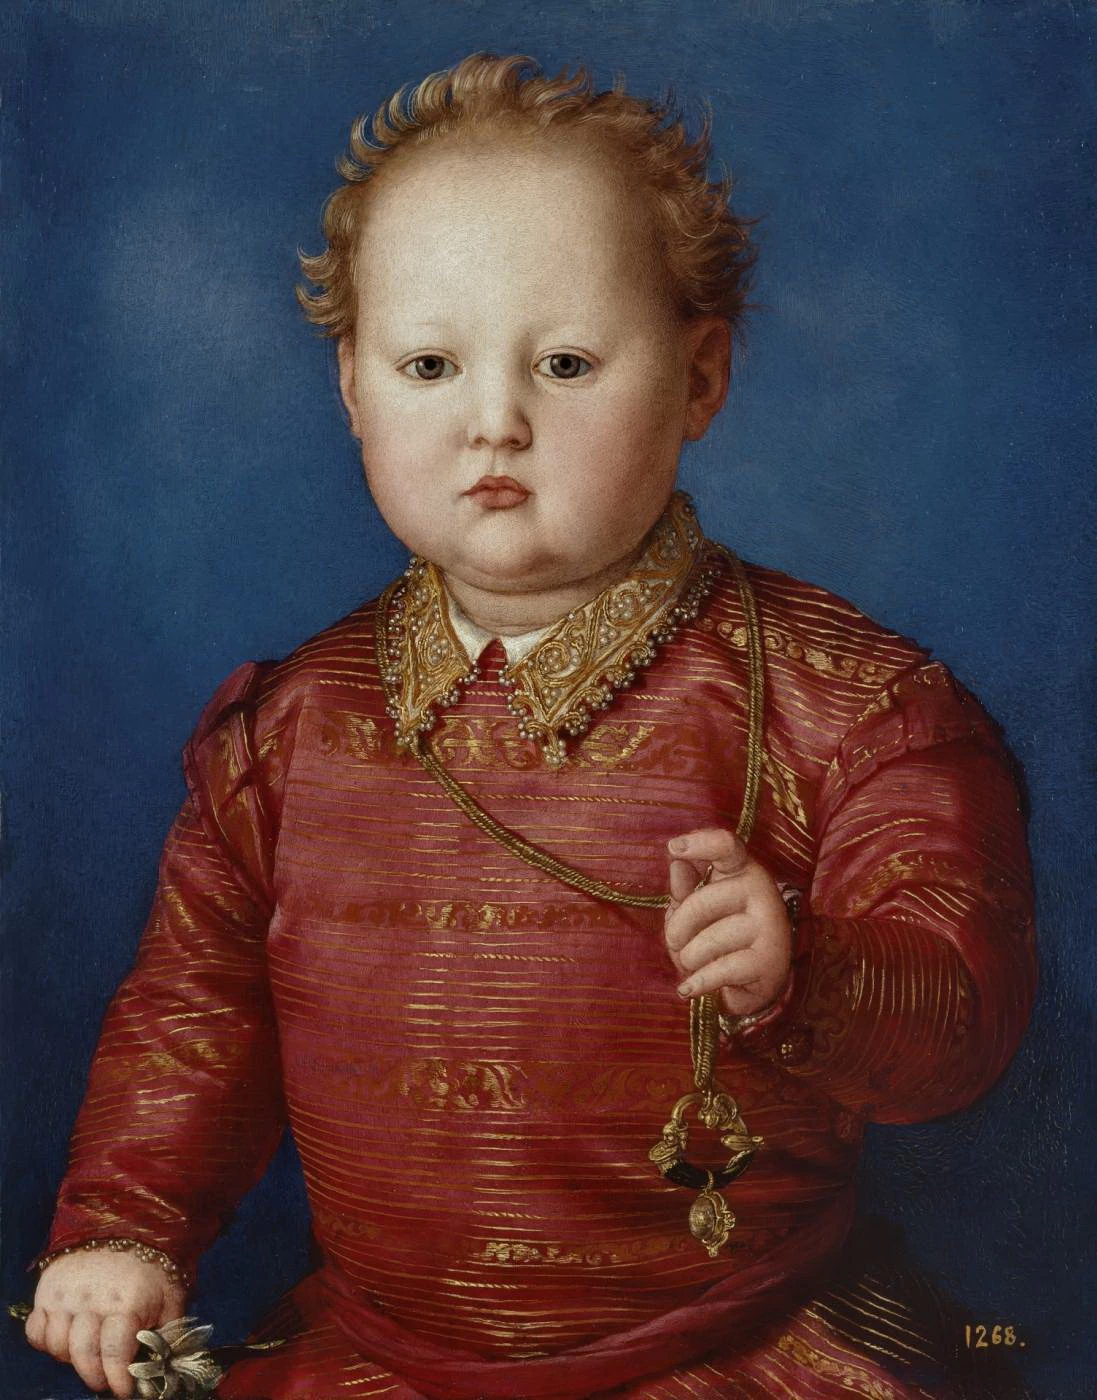  93-Ritratto di don Garcia de Medici-Museo del Prado, Madrid